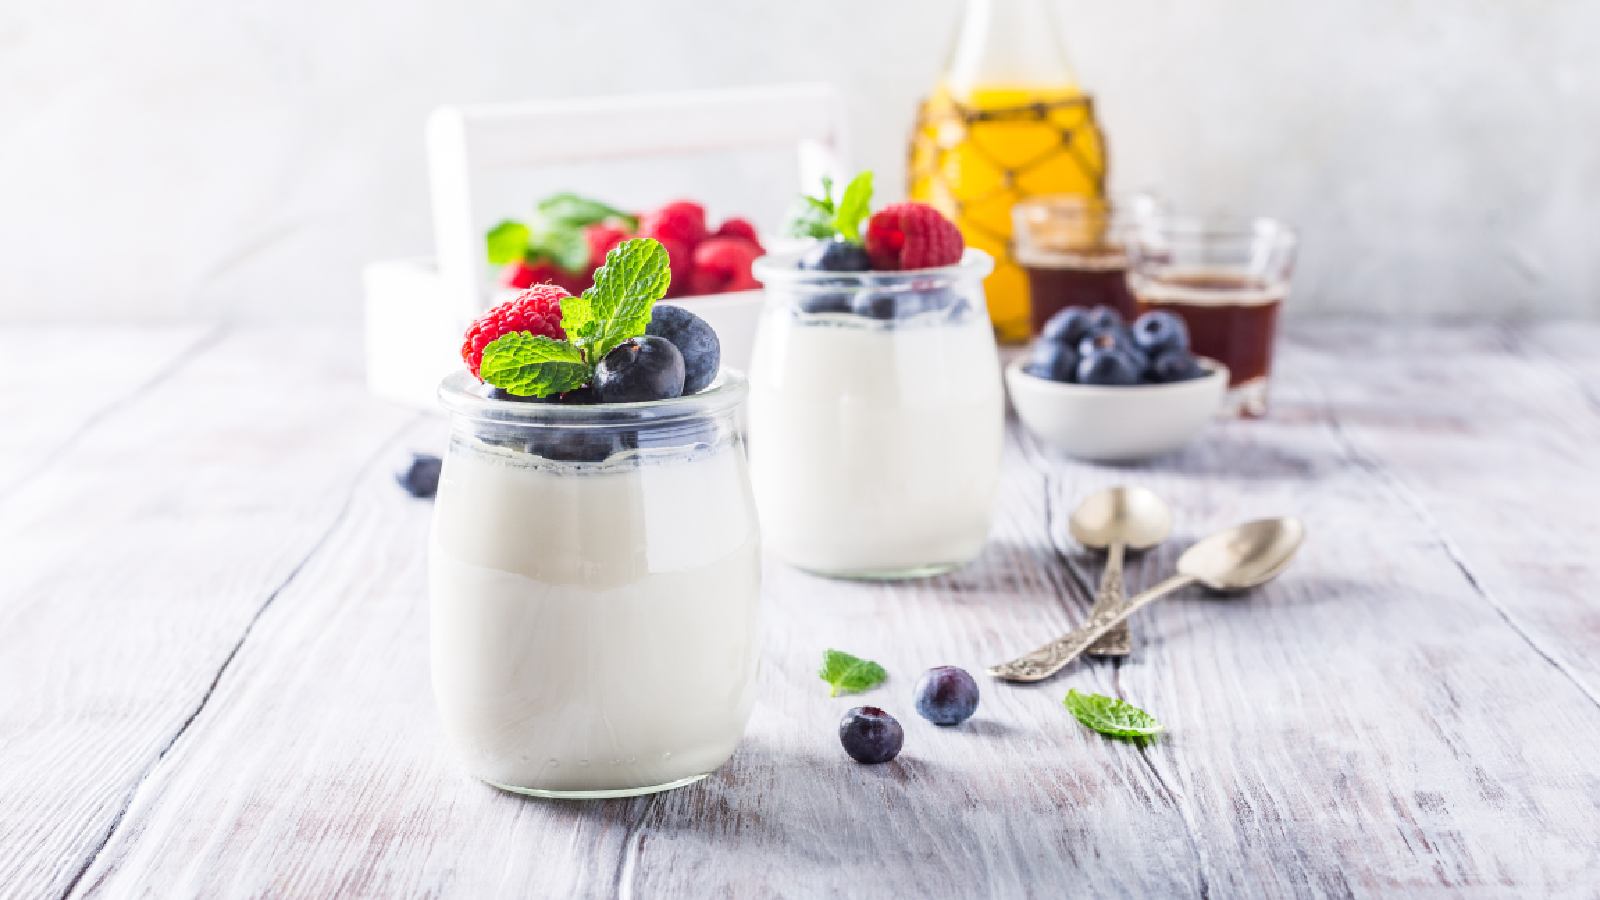 Find 5 ways to eat yogurt to kickstart your weight loss